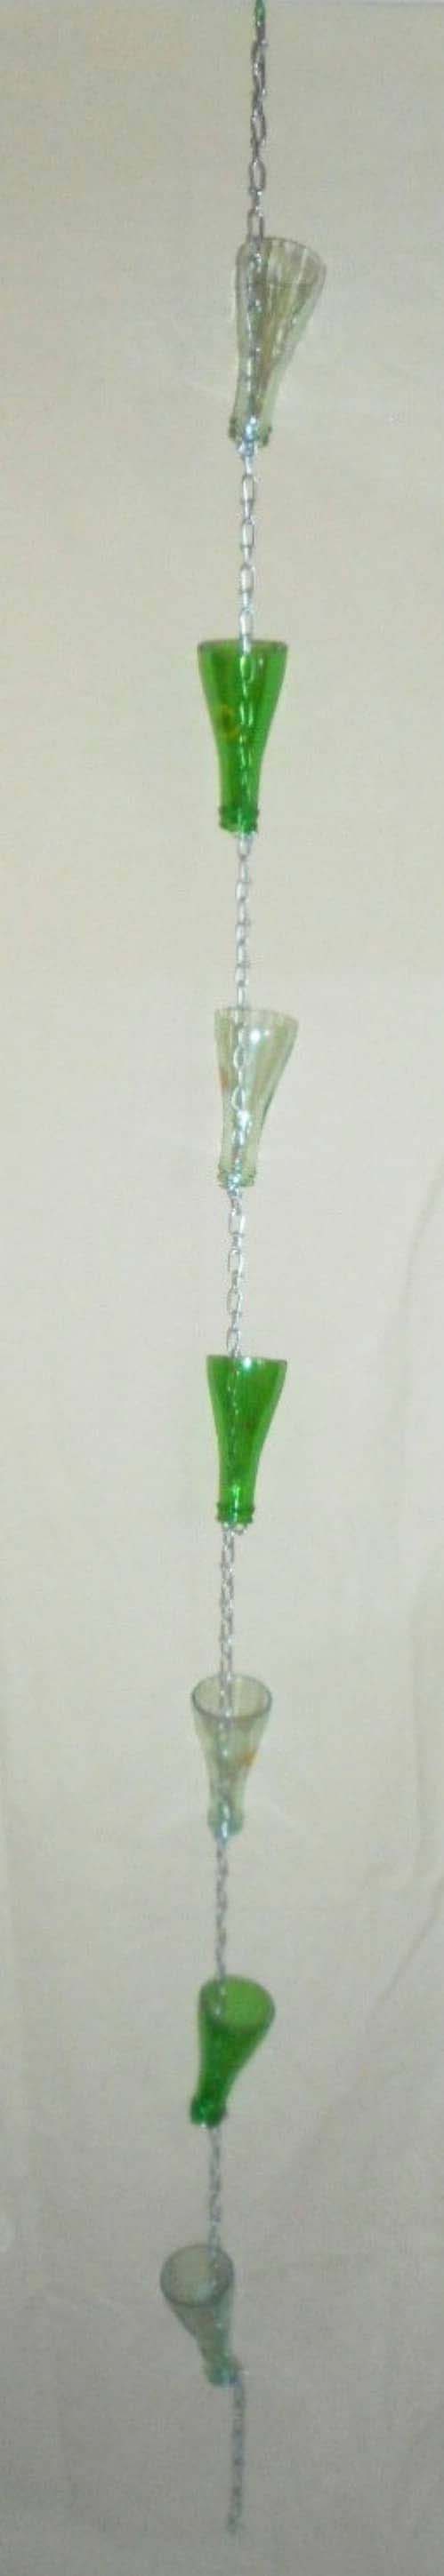 Upcycled Glass Bottle Top Rain Chain #diyrainchain #rainchain #decorhomeideas